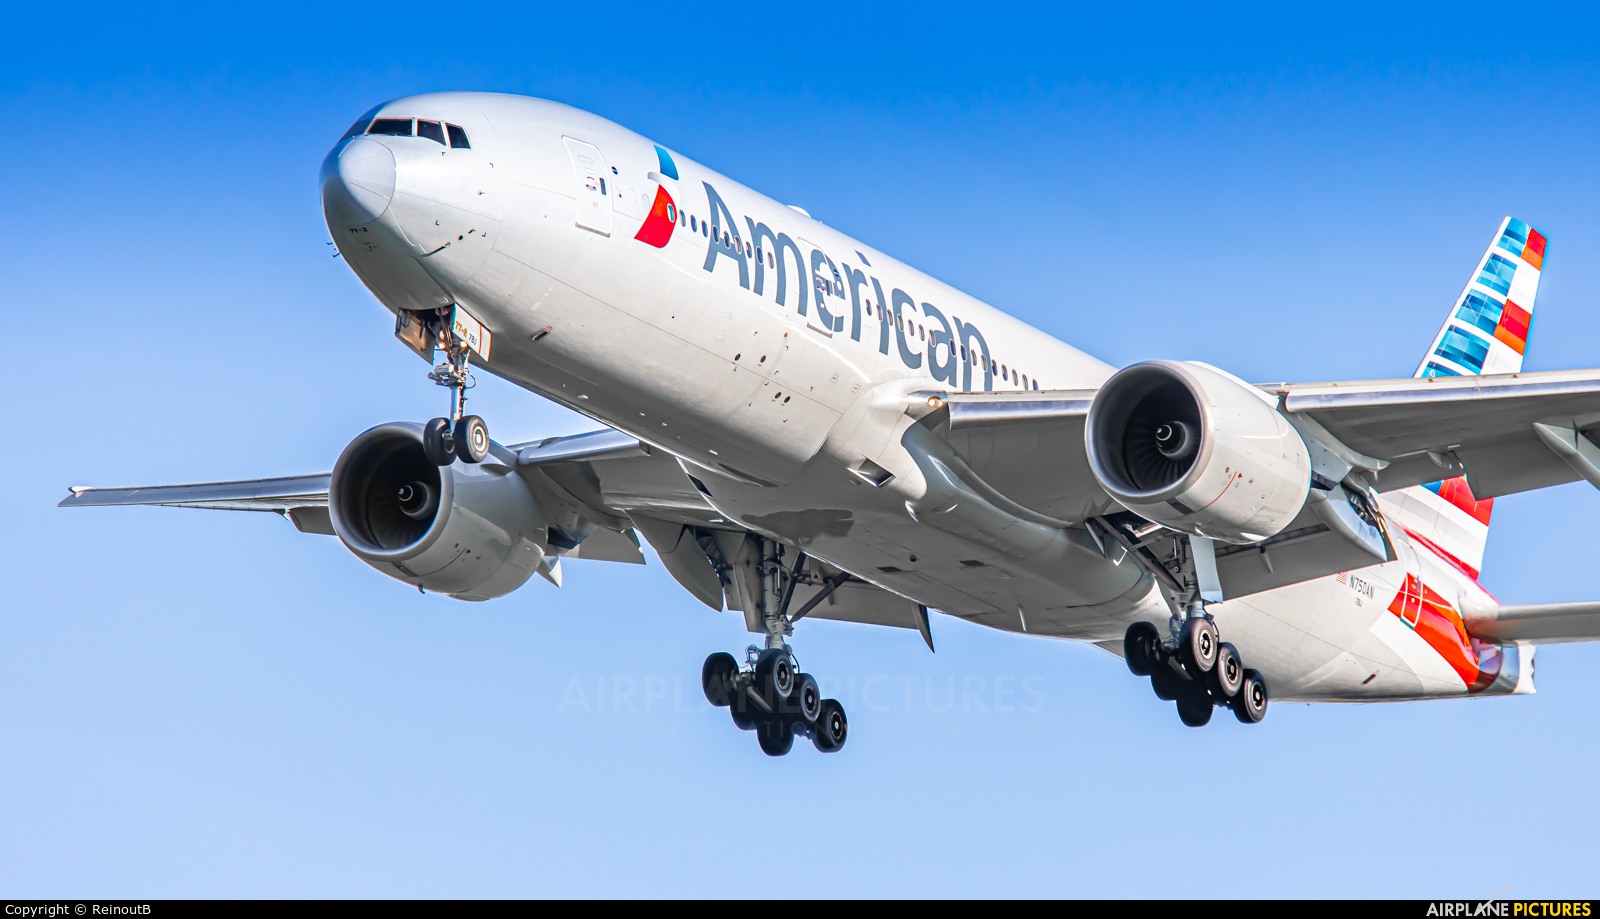 American 777 first class